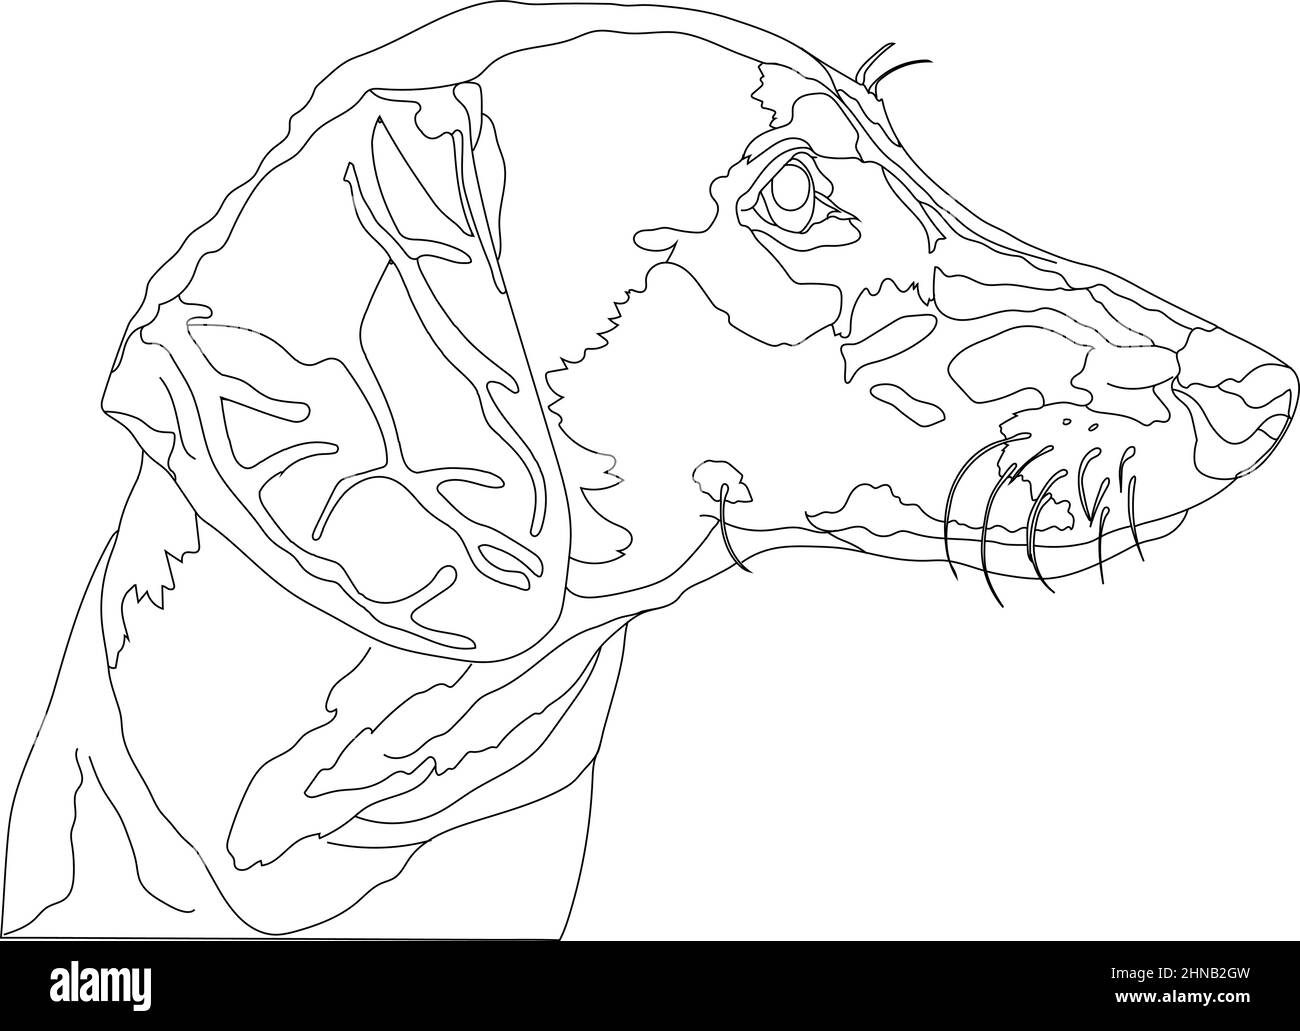 Dog Kurzhaar isolated on a white background. Vector illustration. Creepy Dog Kurzhaar hand drawn. Stock Vector